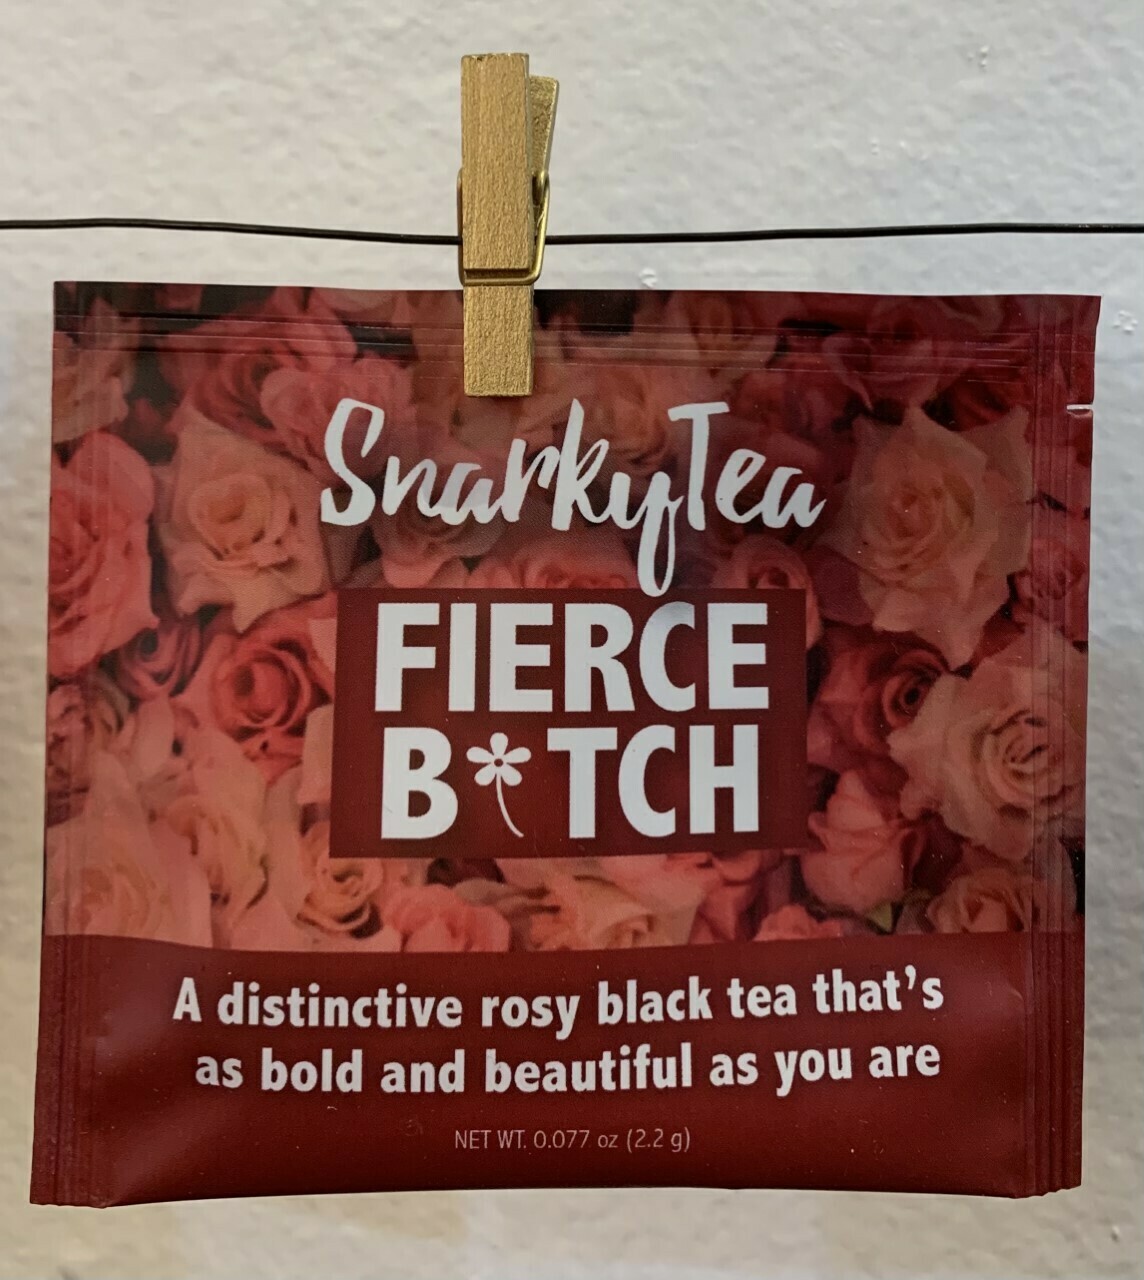 FIERCE B!TCH Rosy Black Tea